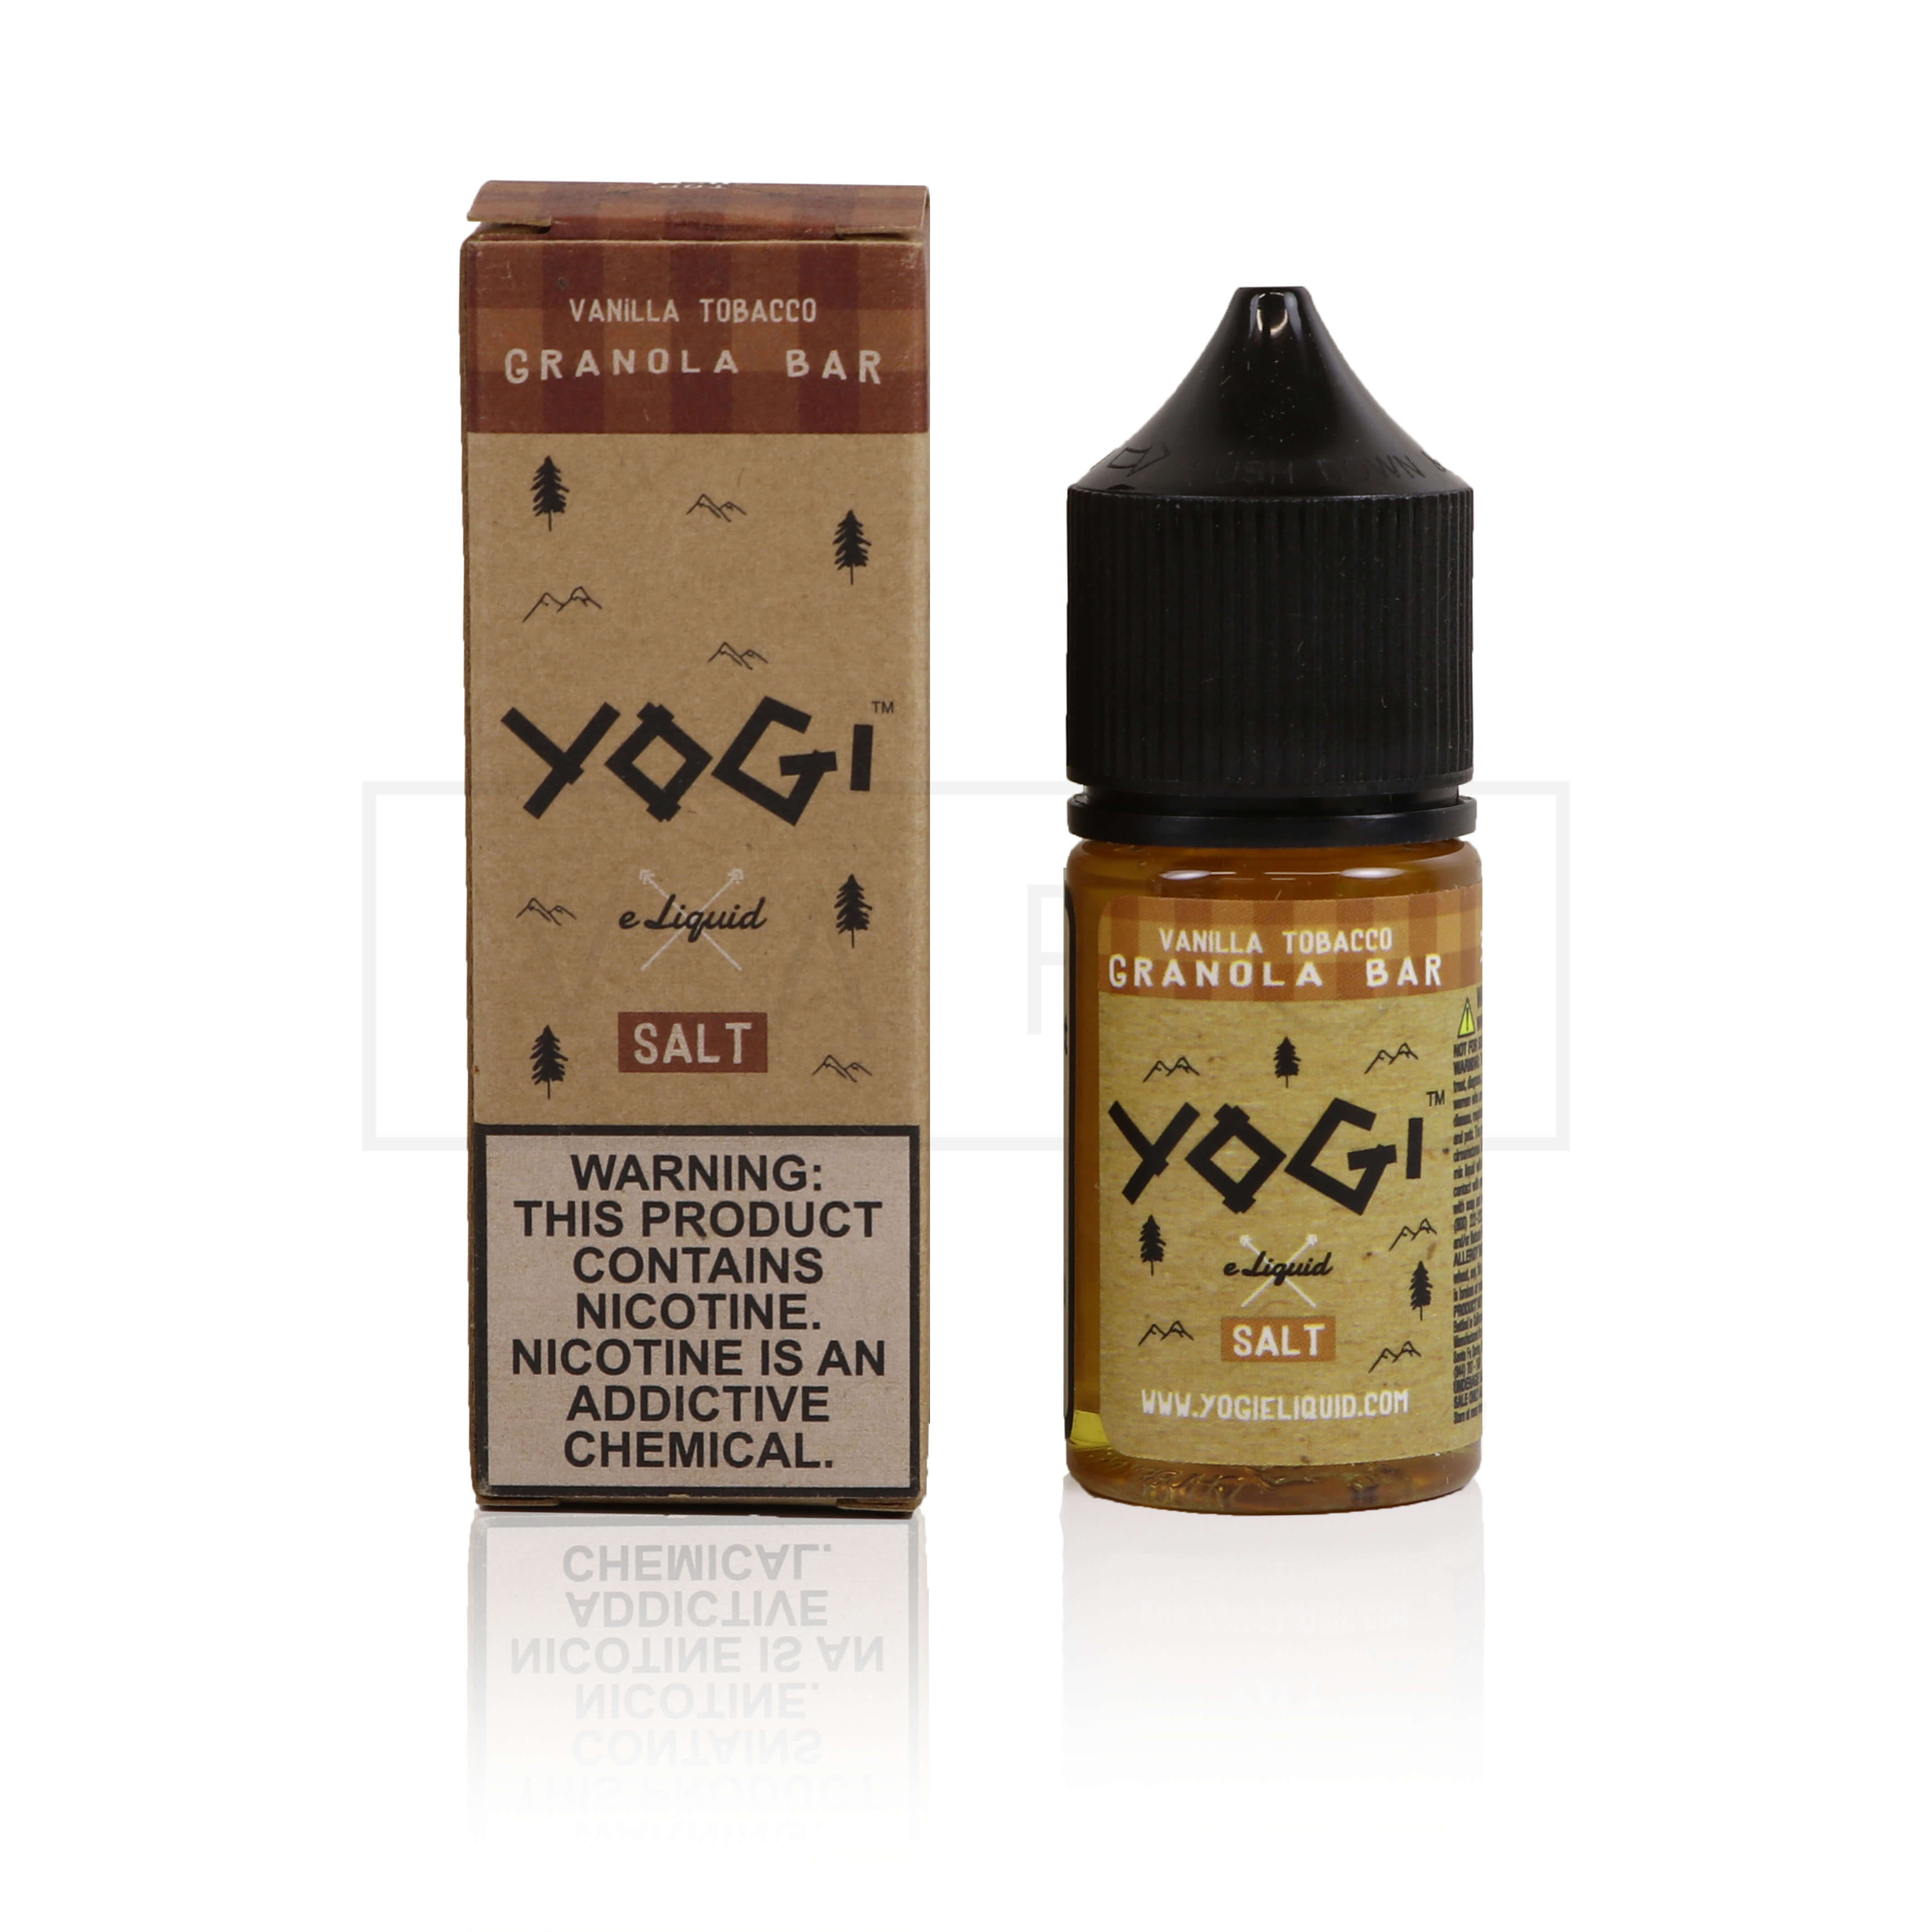 Vanilla Tobacco Granola Bar Salts by Yogi E-Liquid